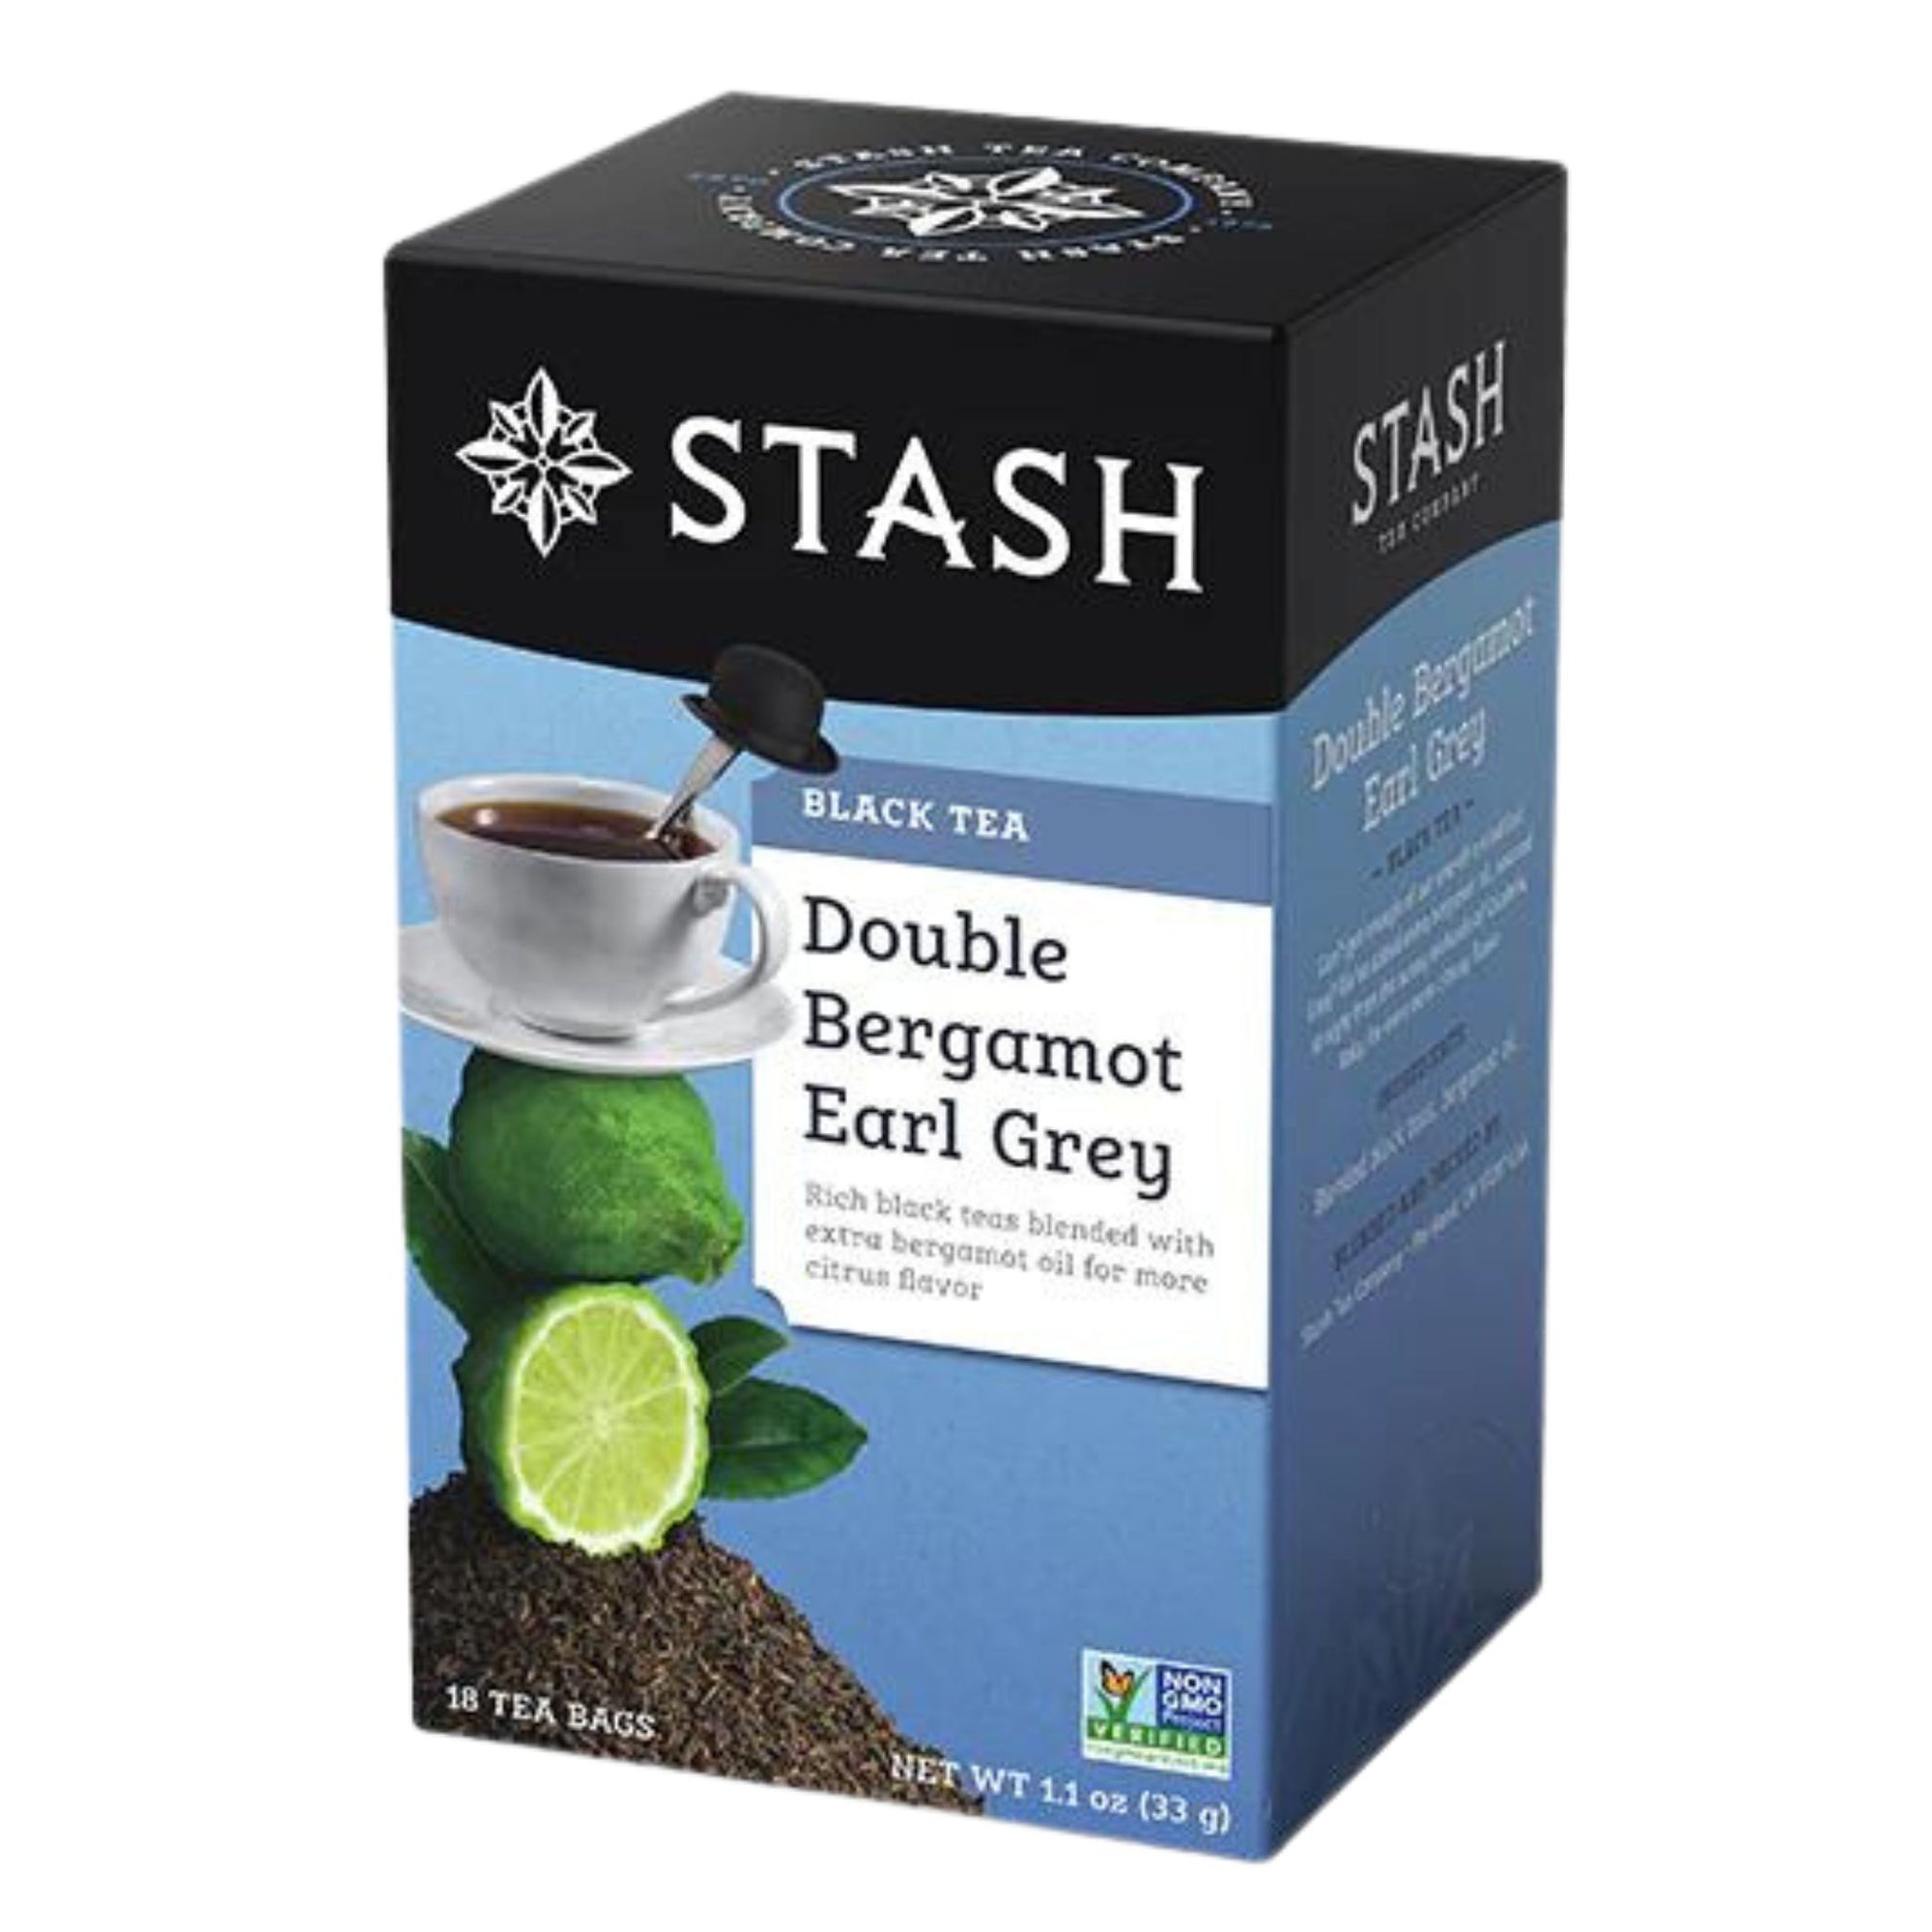 Stash Double Bergamot Earl Grey Black Tea - 18 tea bags in a box - Rich black teas blended with extra bergamot oil for more citrus flavour.